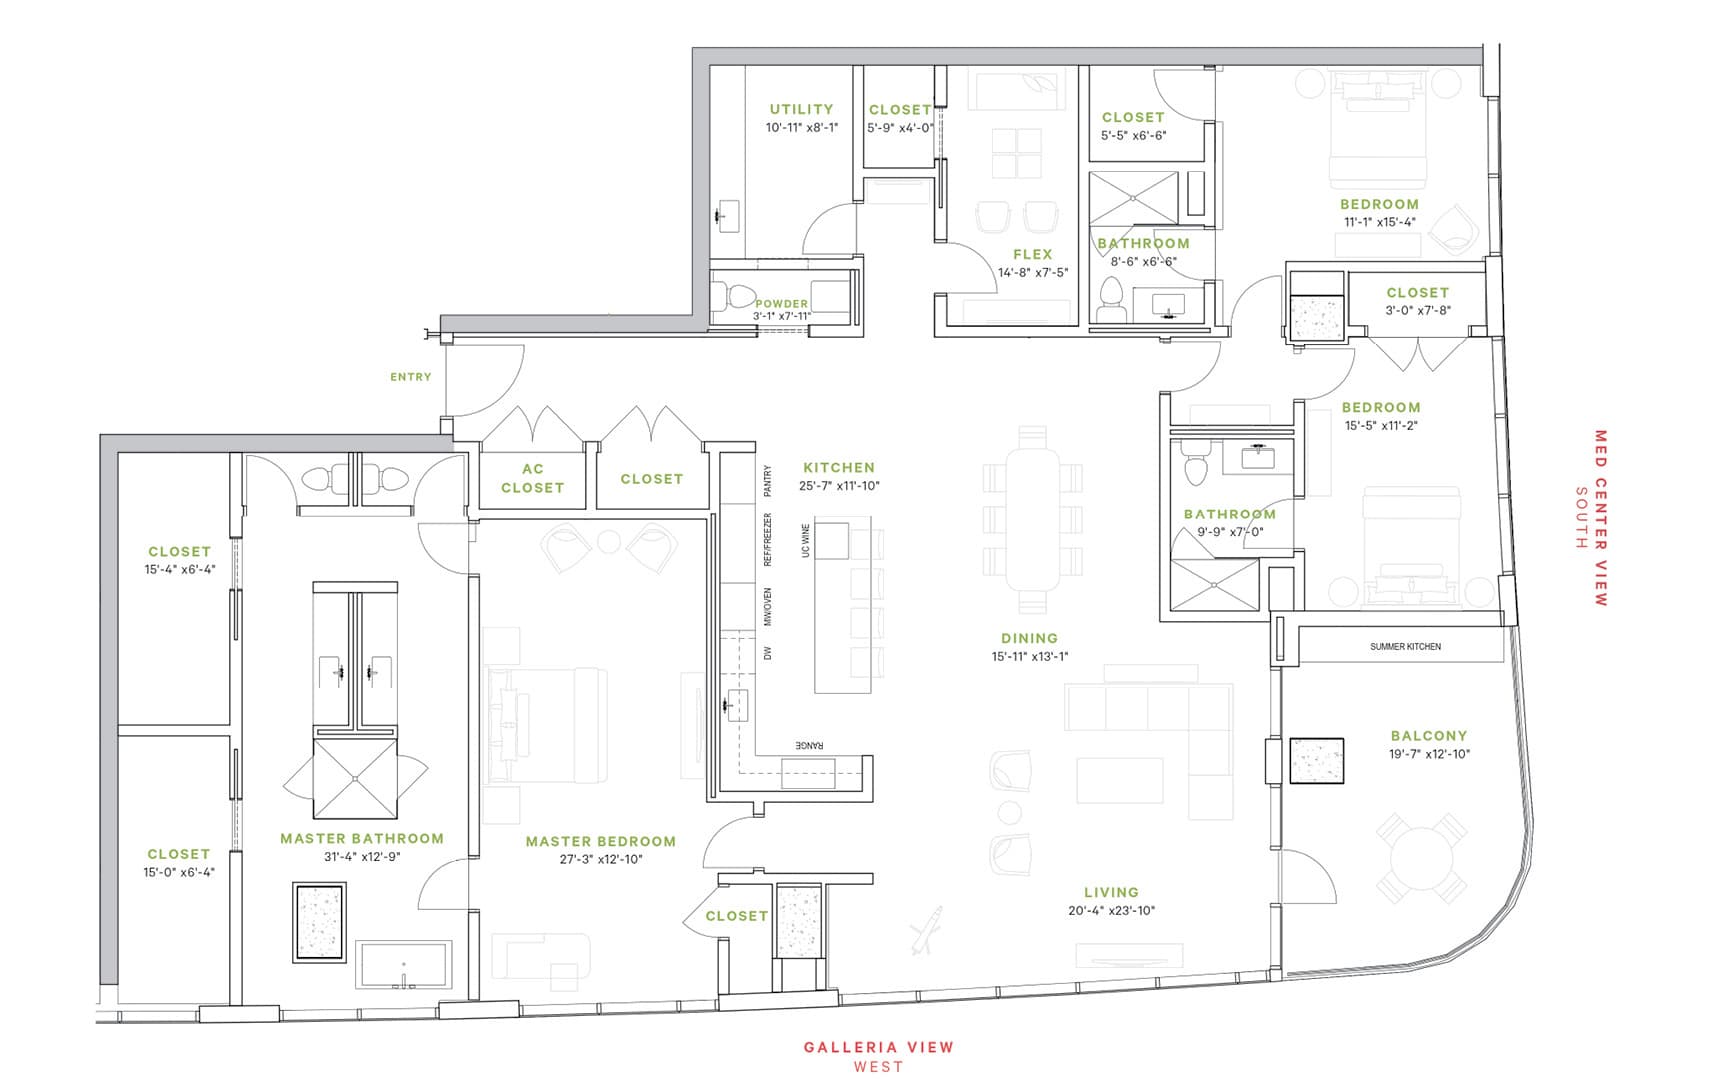 Complete view of Inwood Penthouse Condominium Floorplan